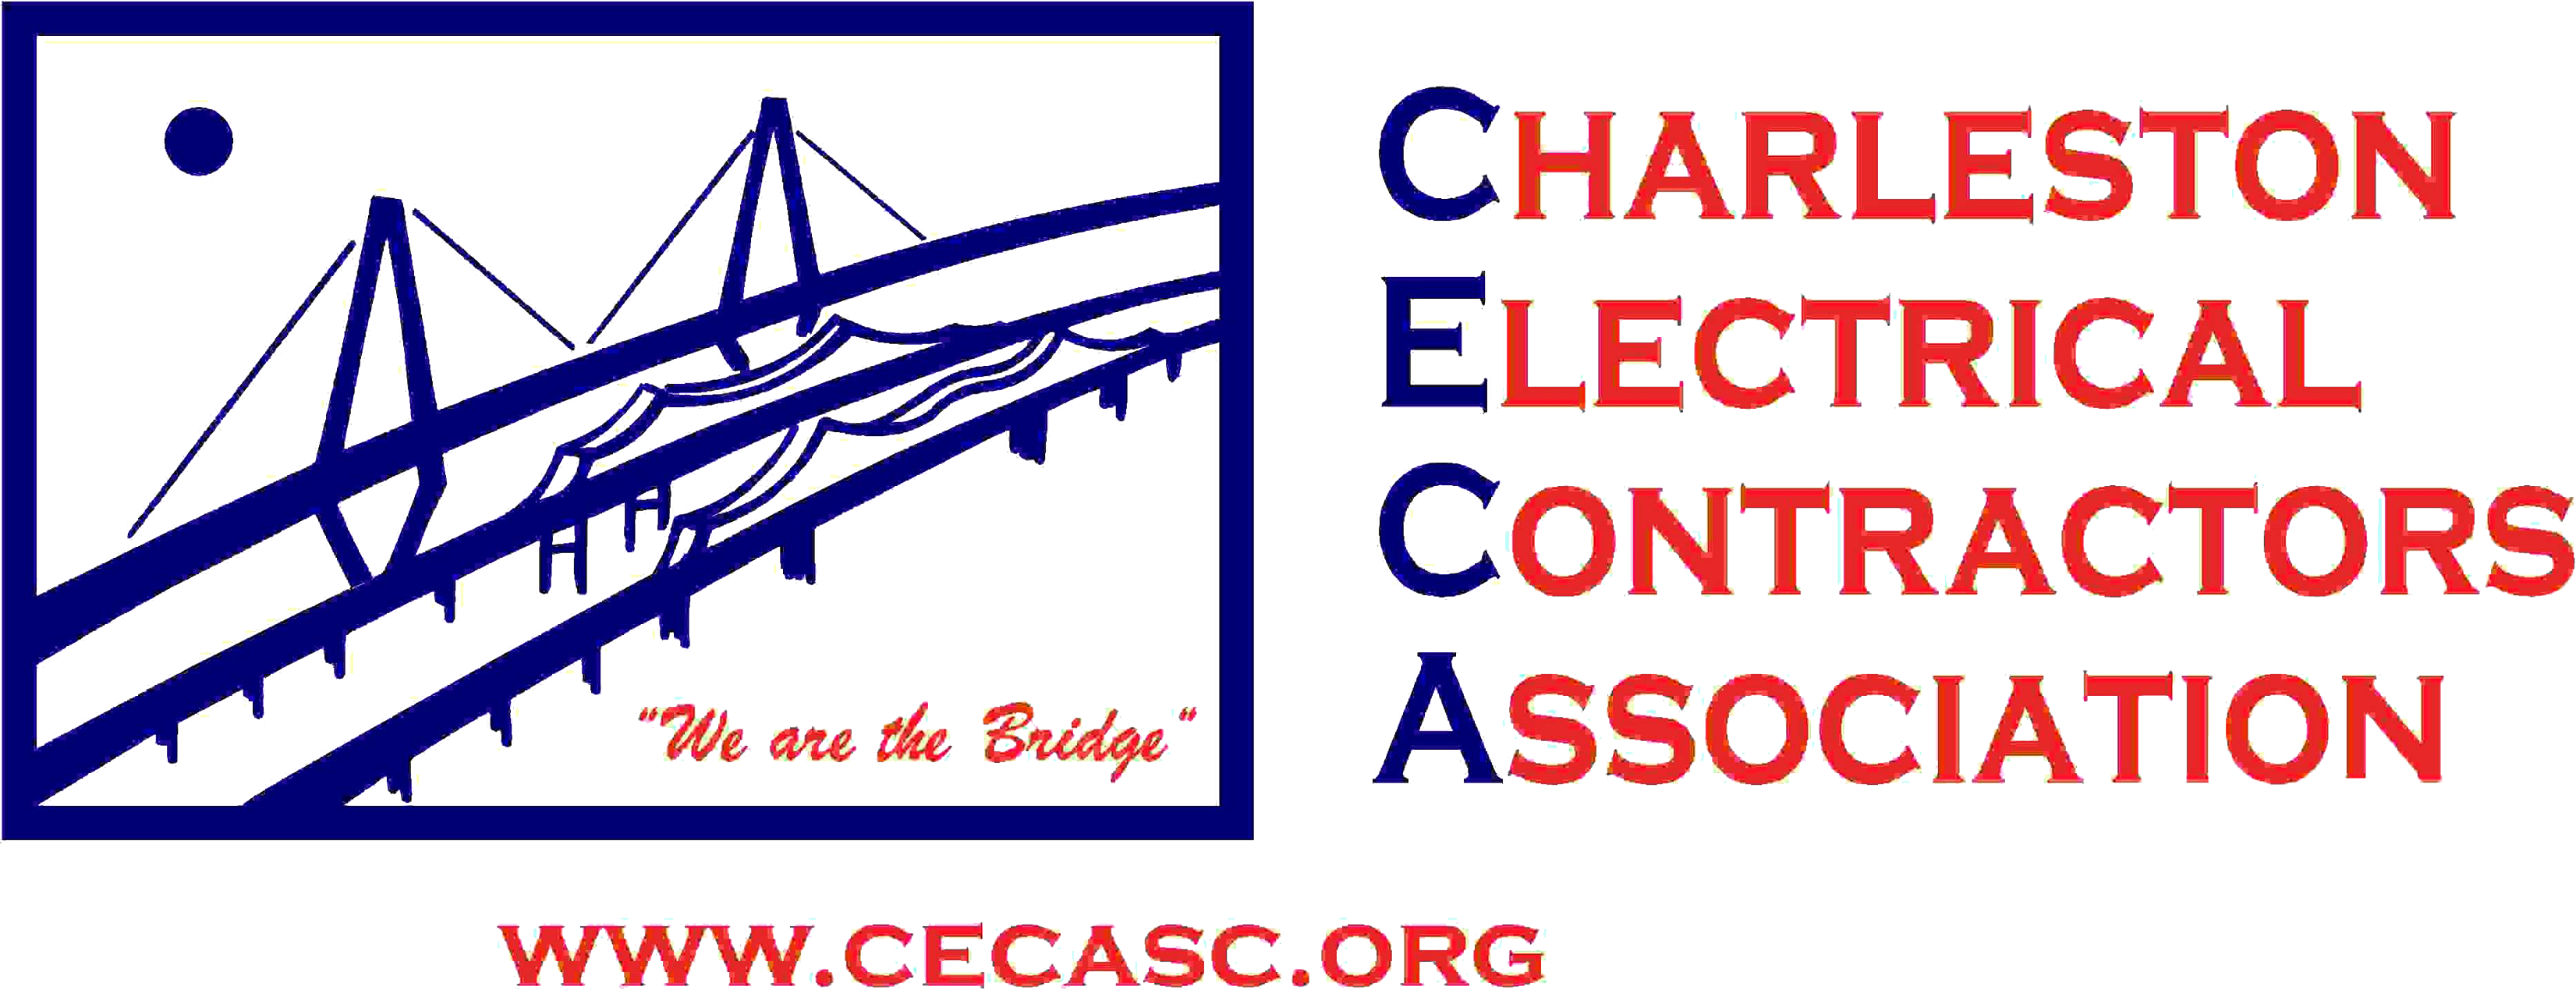 Charleston Electrical Contractors Association logo